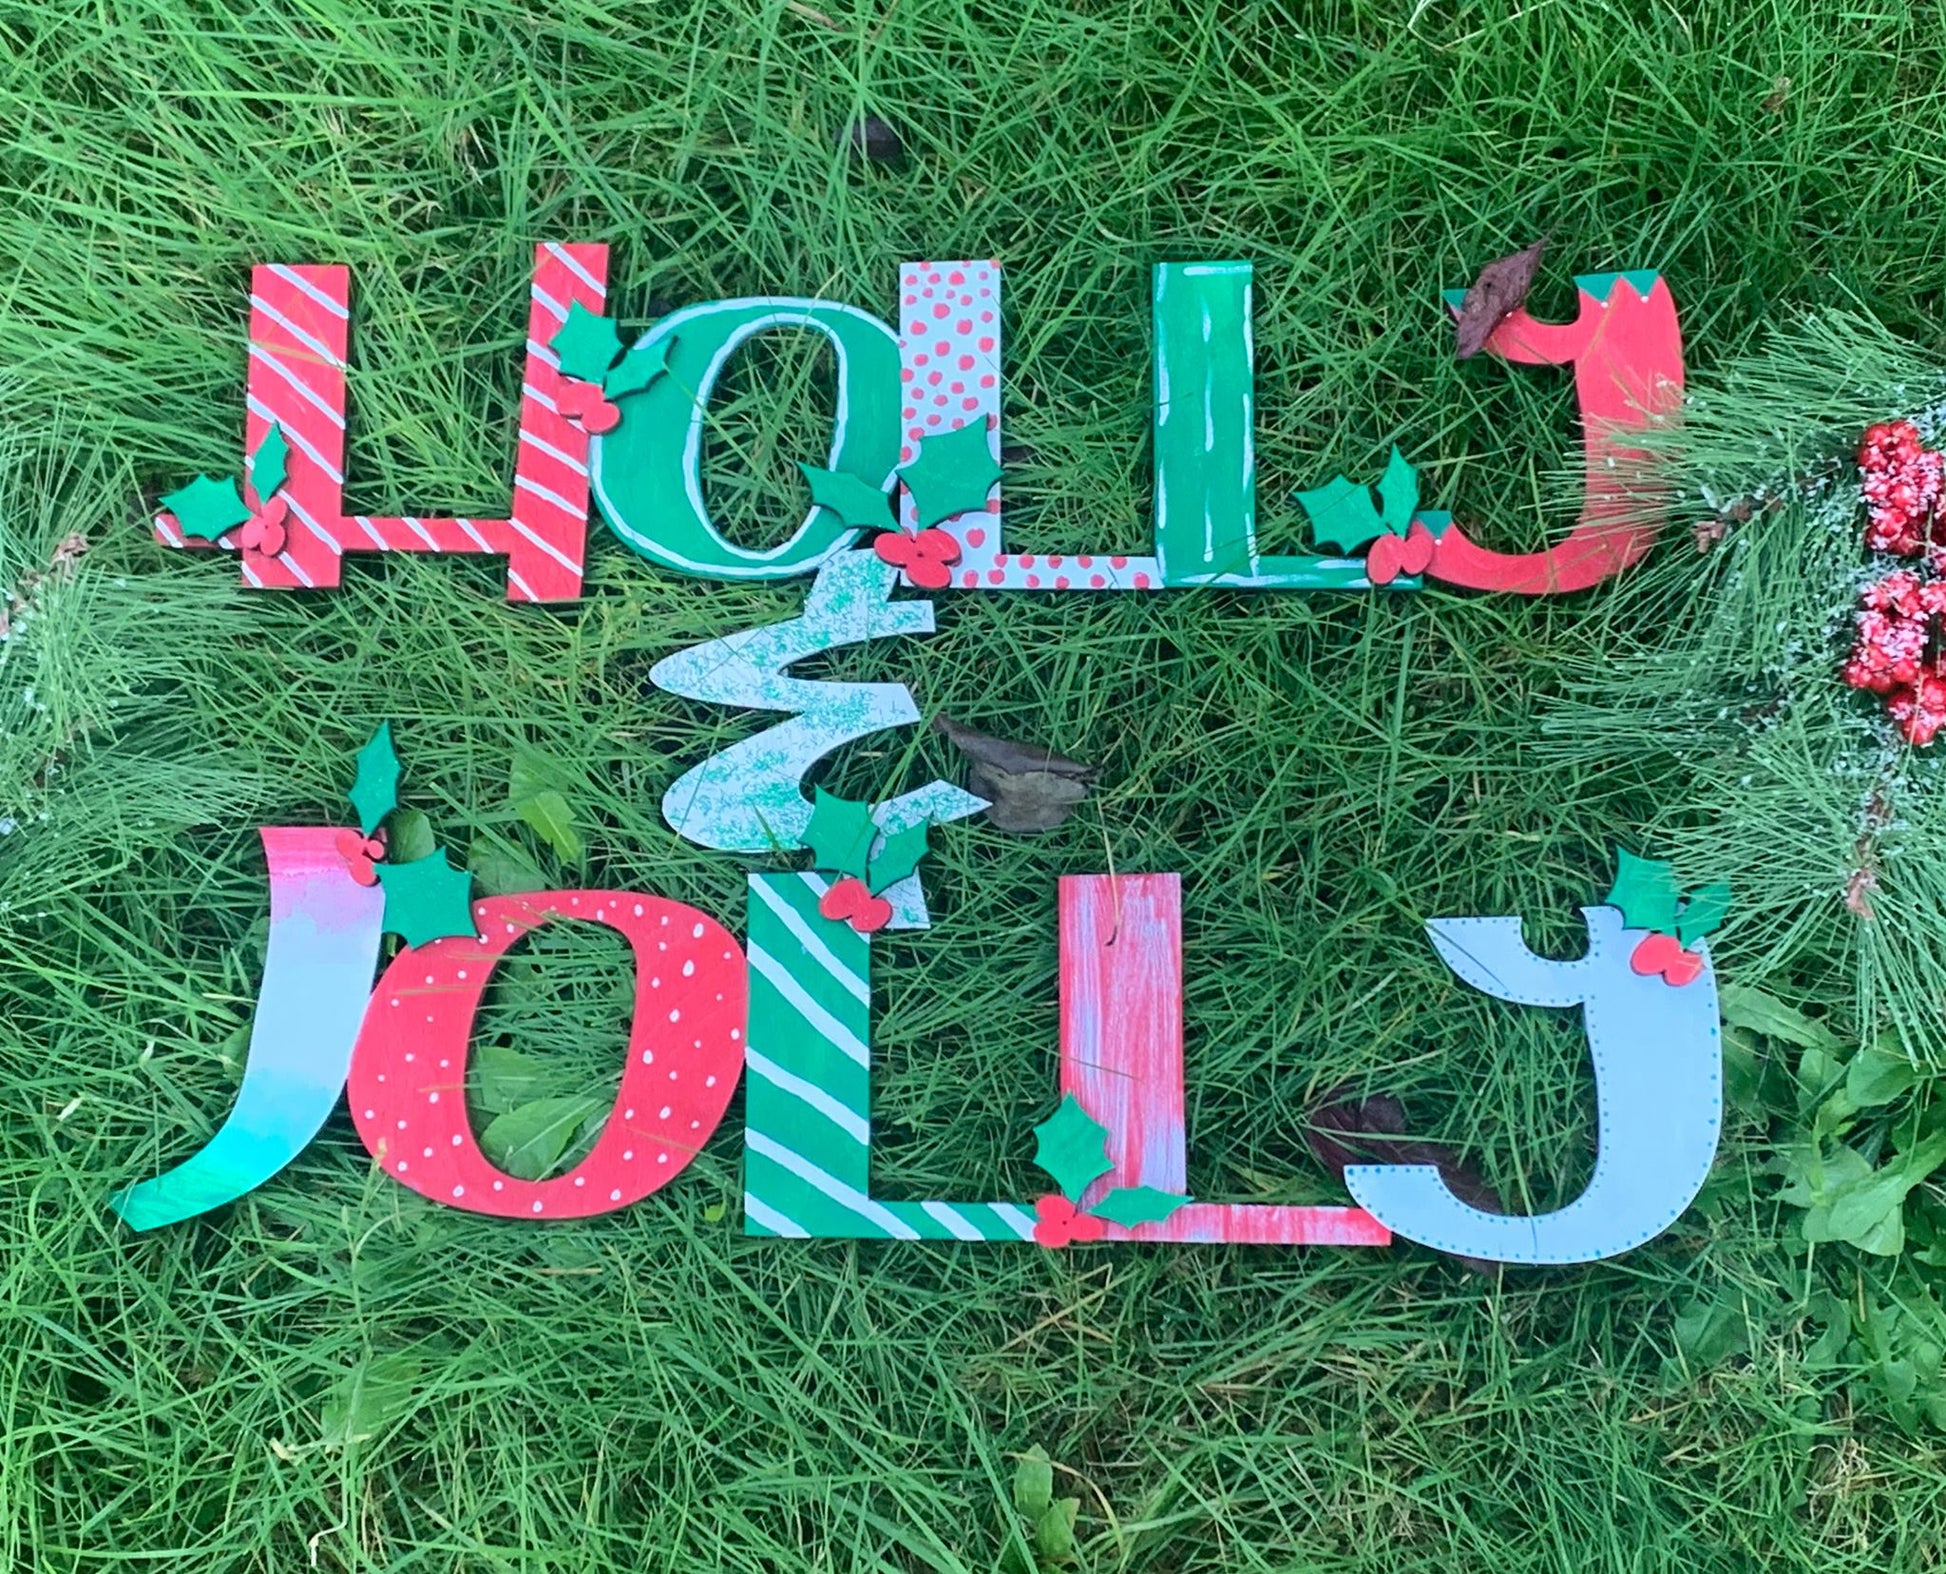 Holly & Jolly christmas cutout - Bucktooth Designs